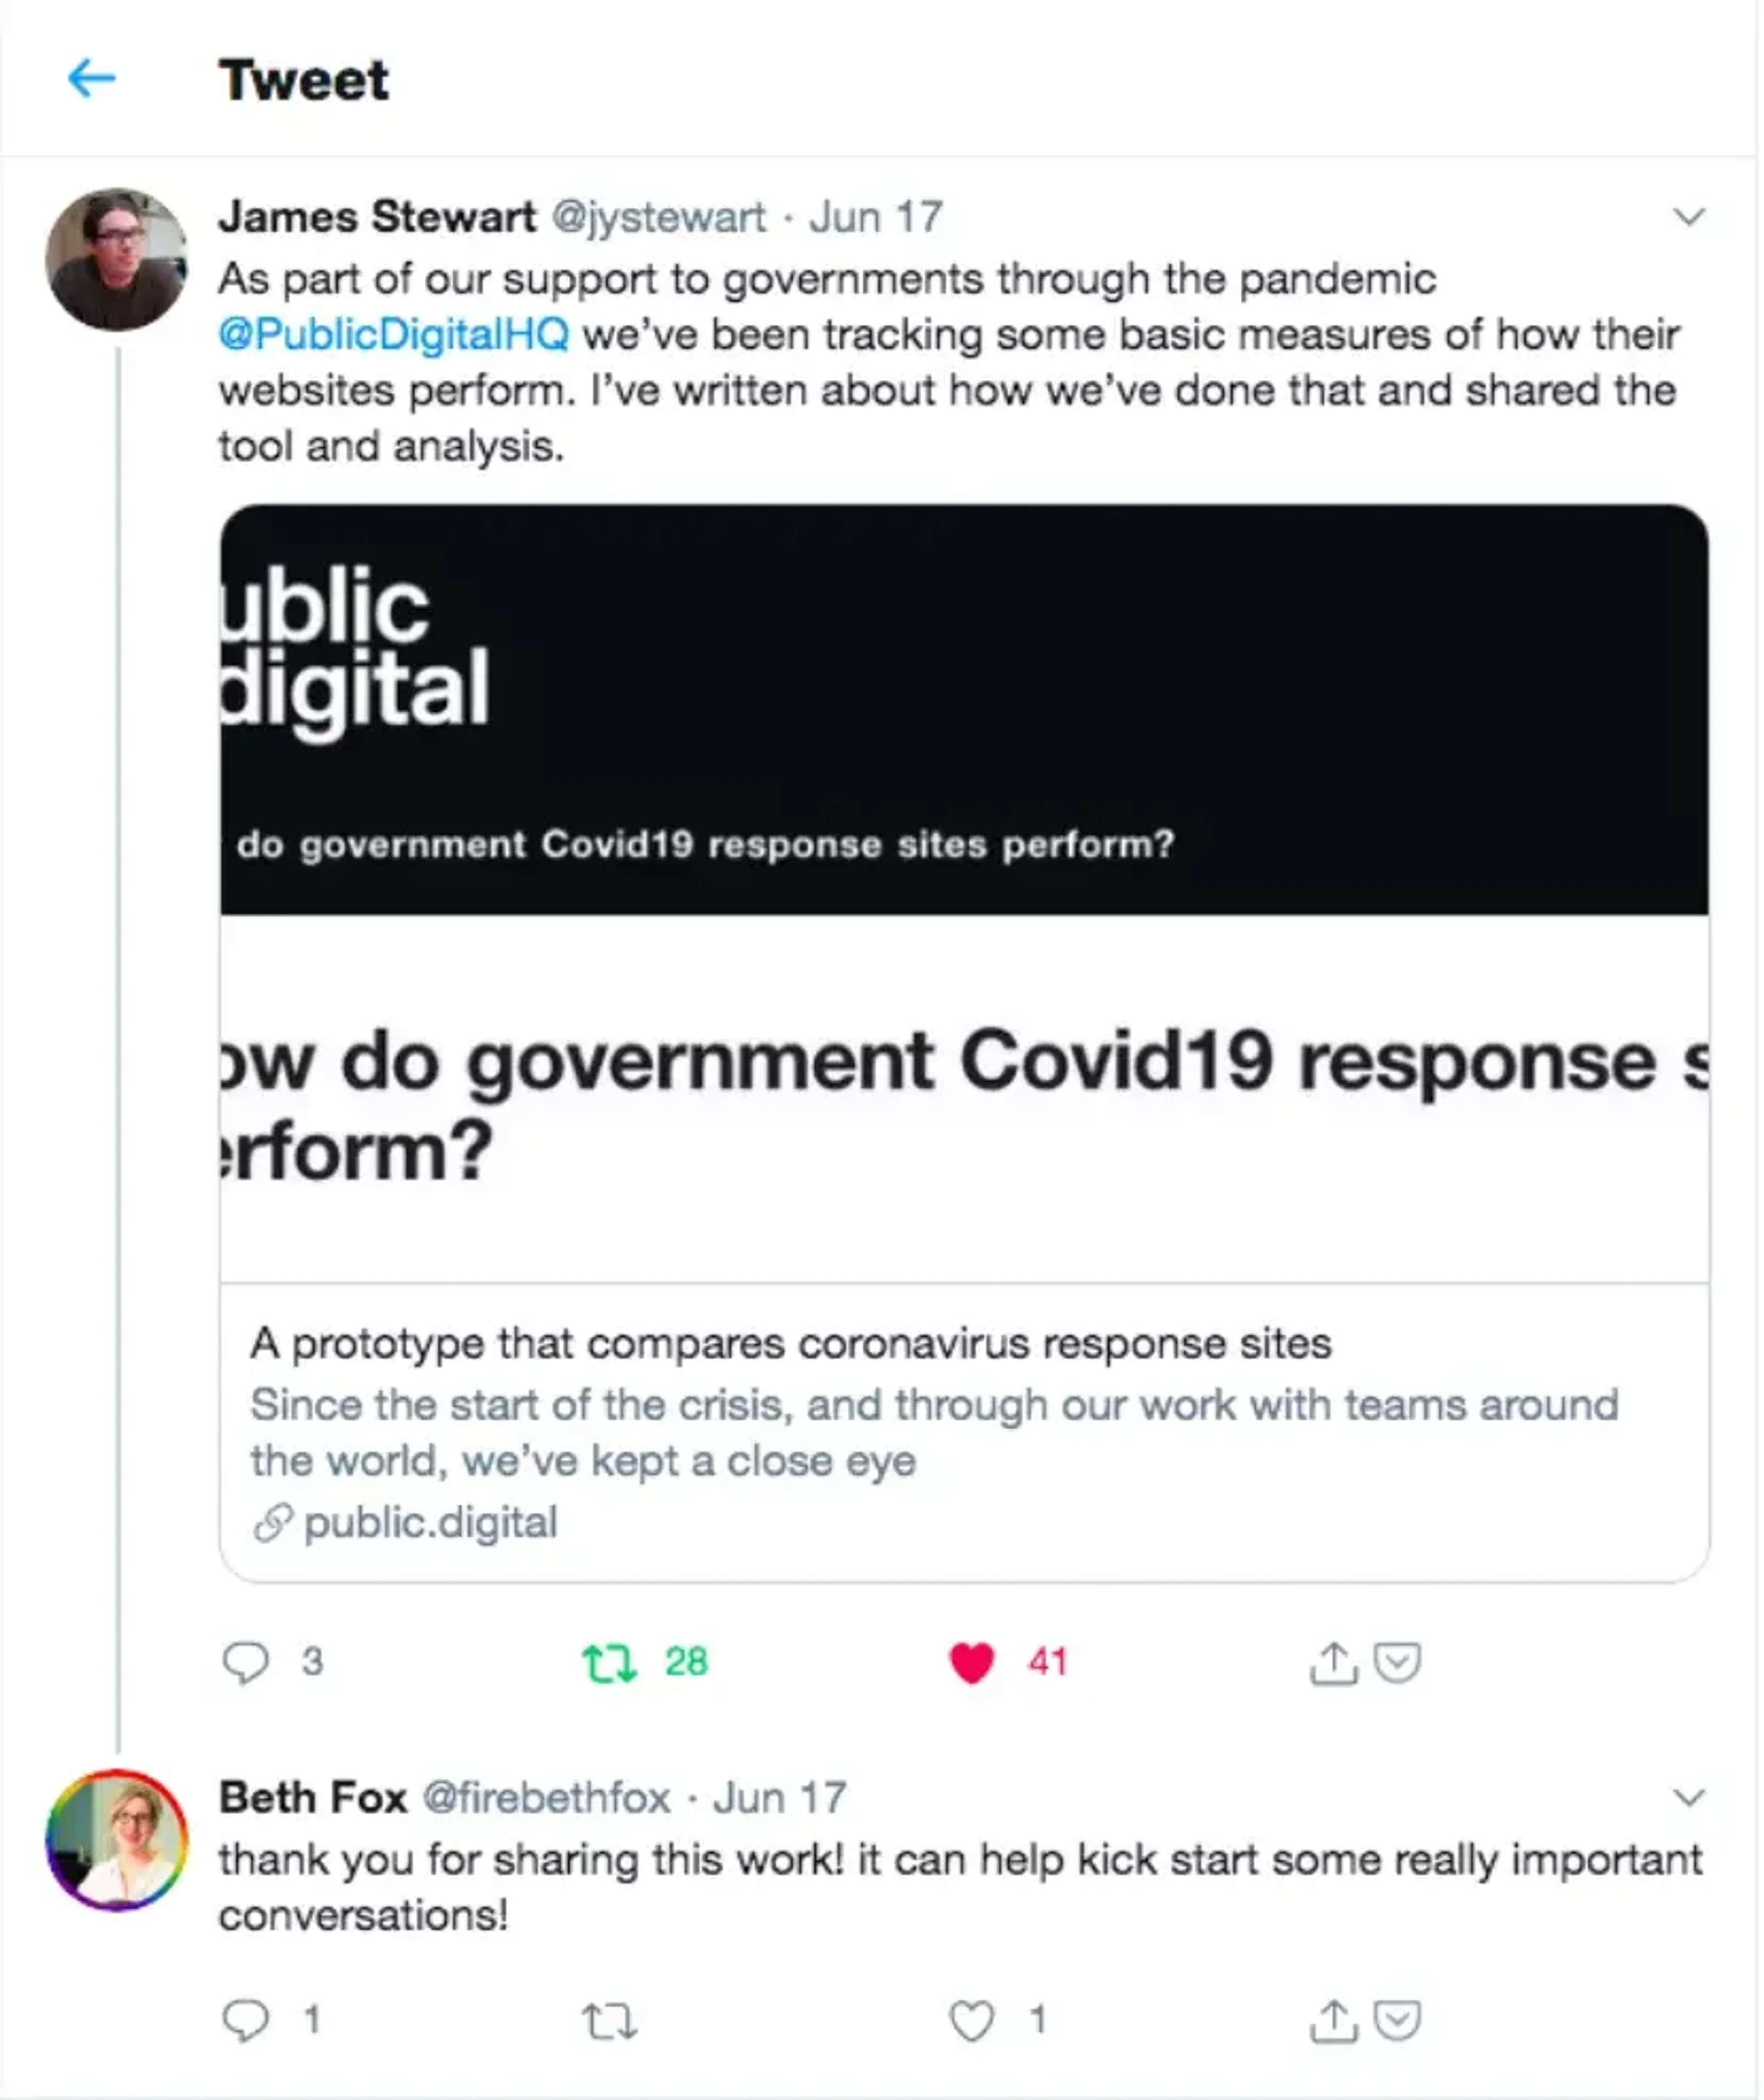 Gvnt Covid response